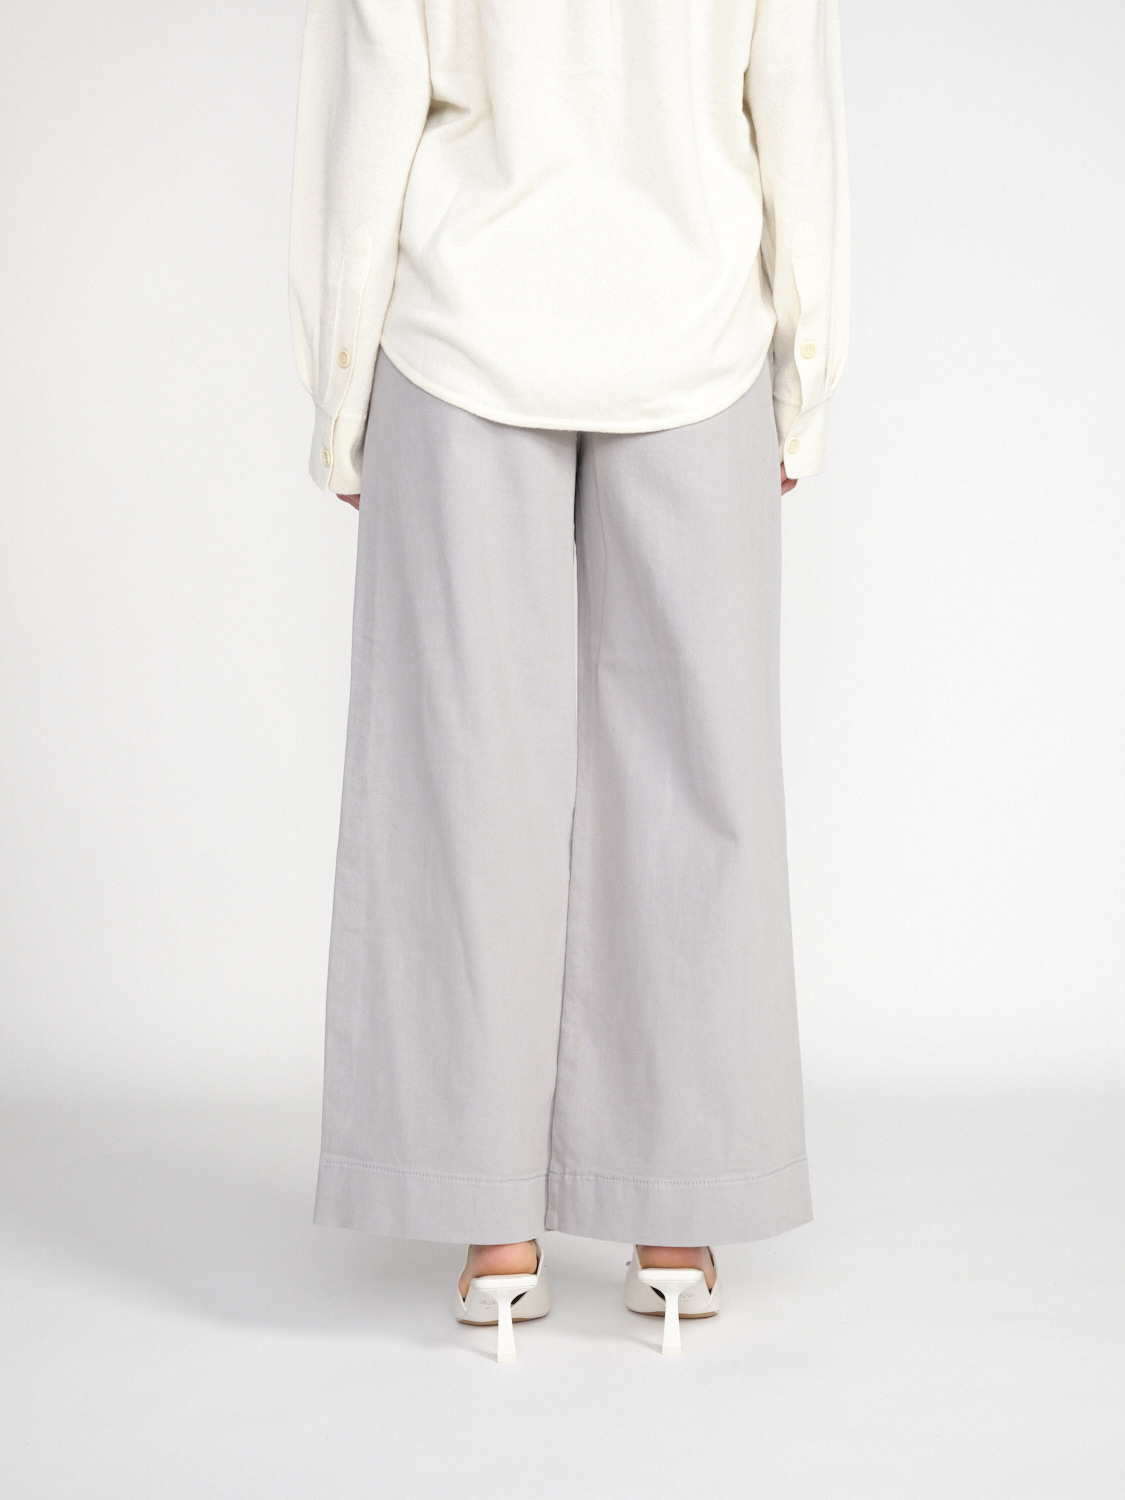 Gitta Banko Lola - Stretchy wide-leg cotton denim  grey XS/S